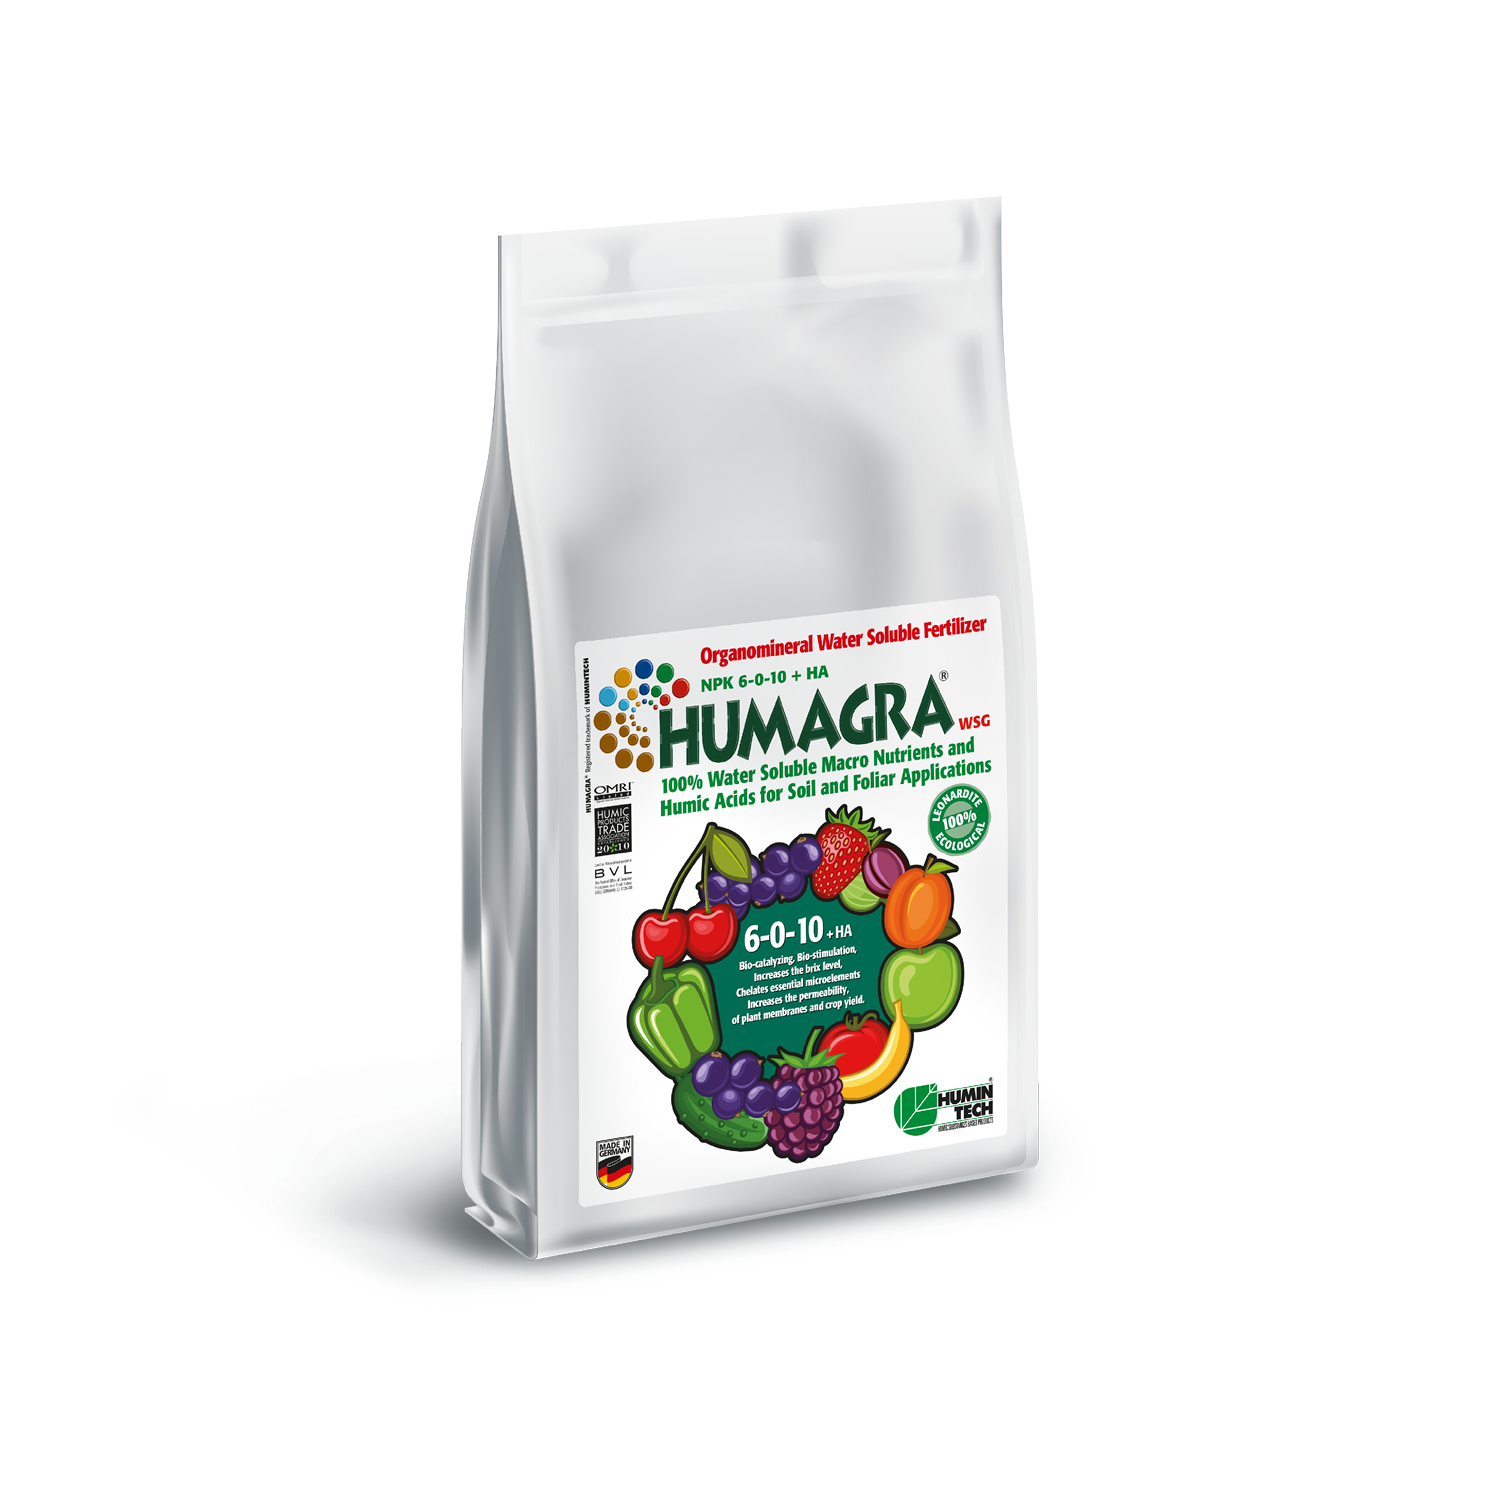 HUMAGRA NPK 6-0-10 + HA WSG Organomineral Water Soluble Fertilizer bag